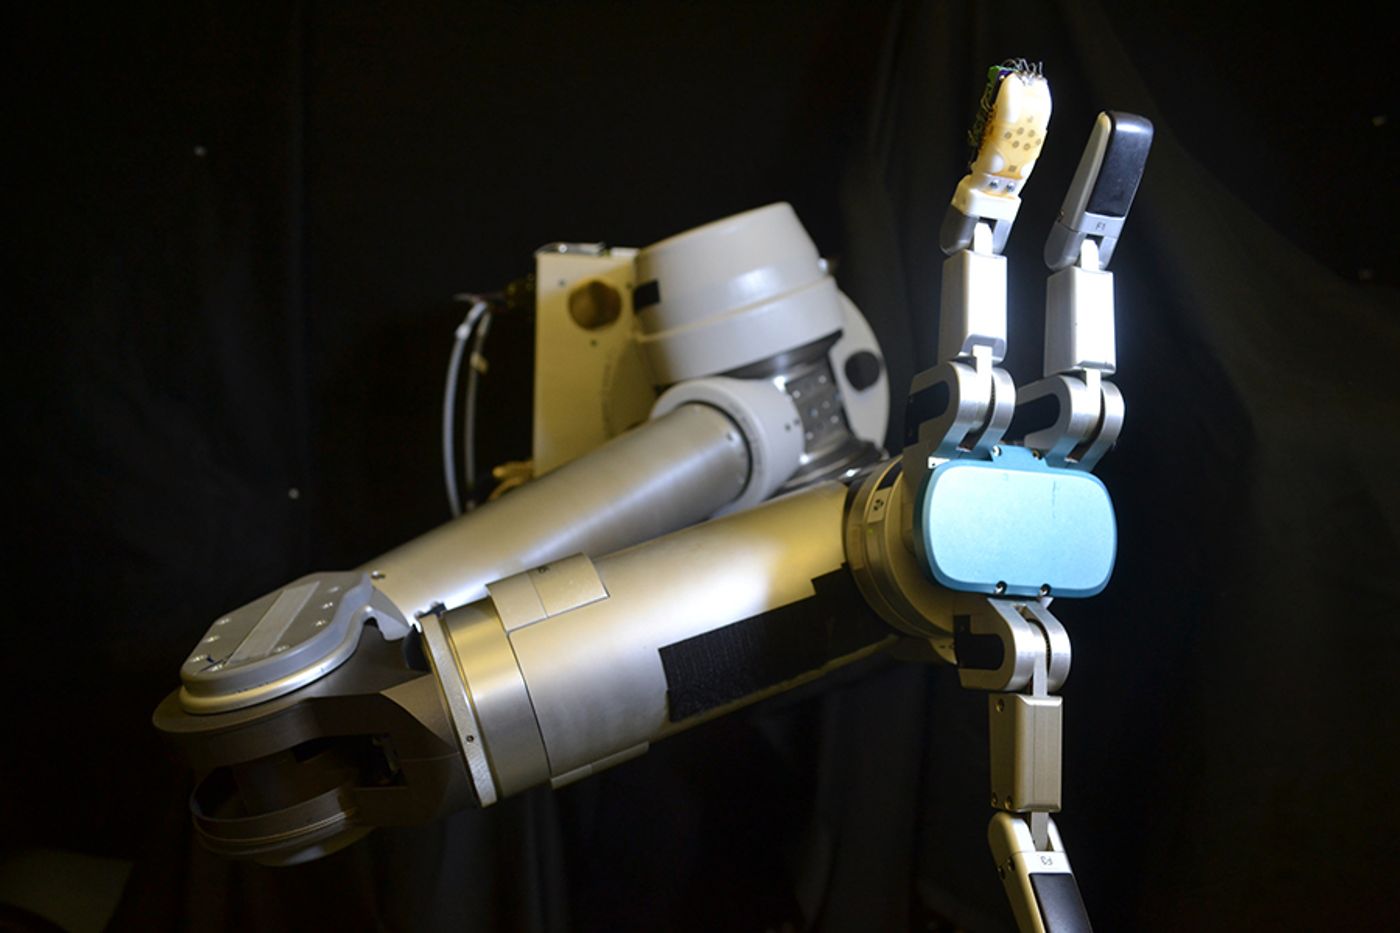 sensor skin on robotic arm, credit: UCLA Engineering